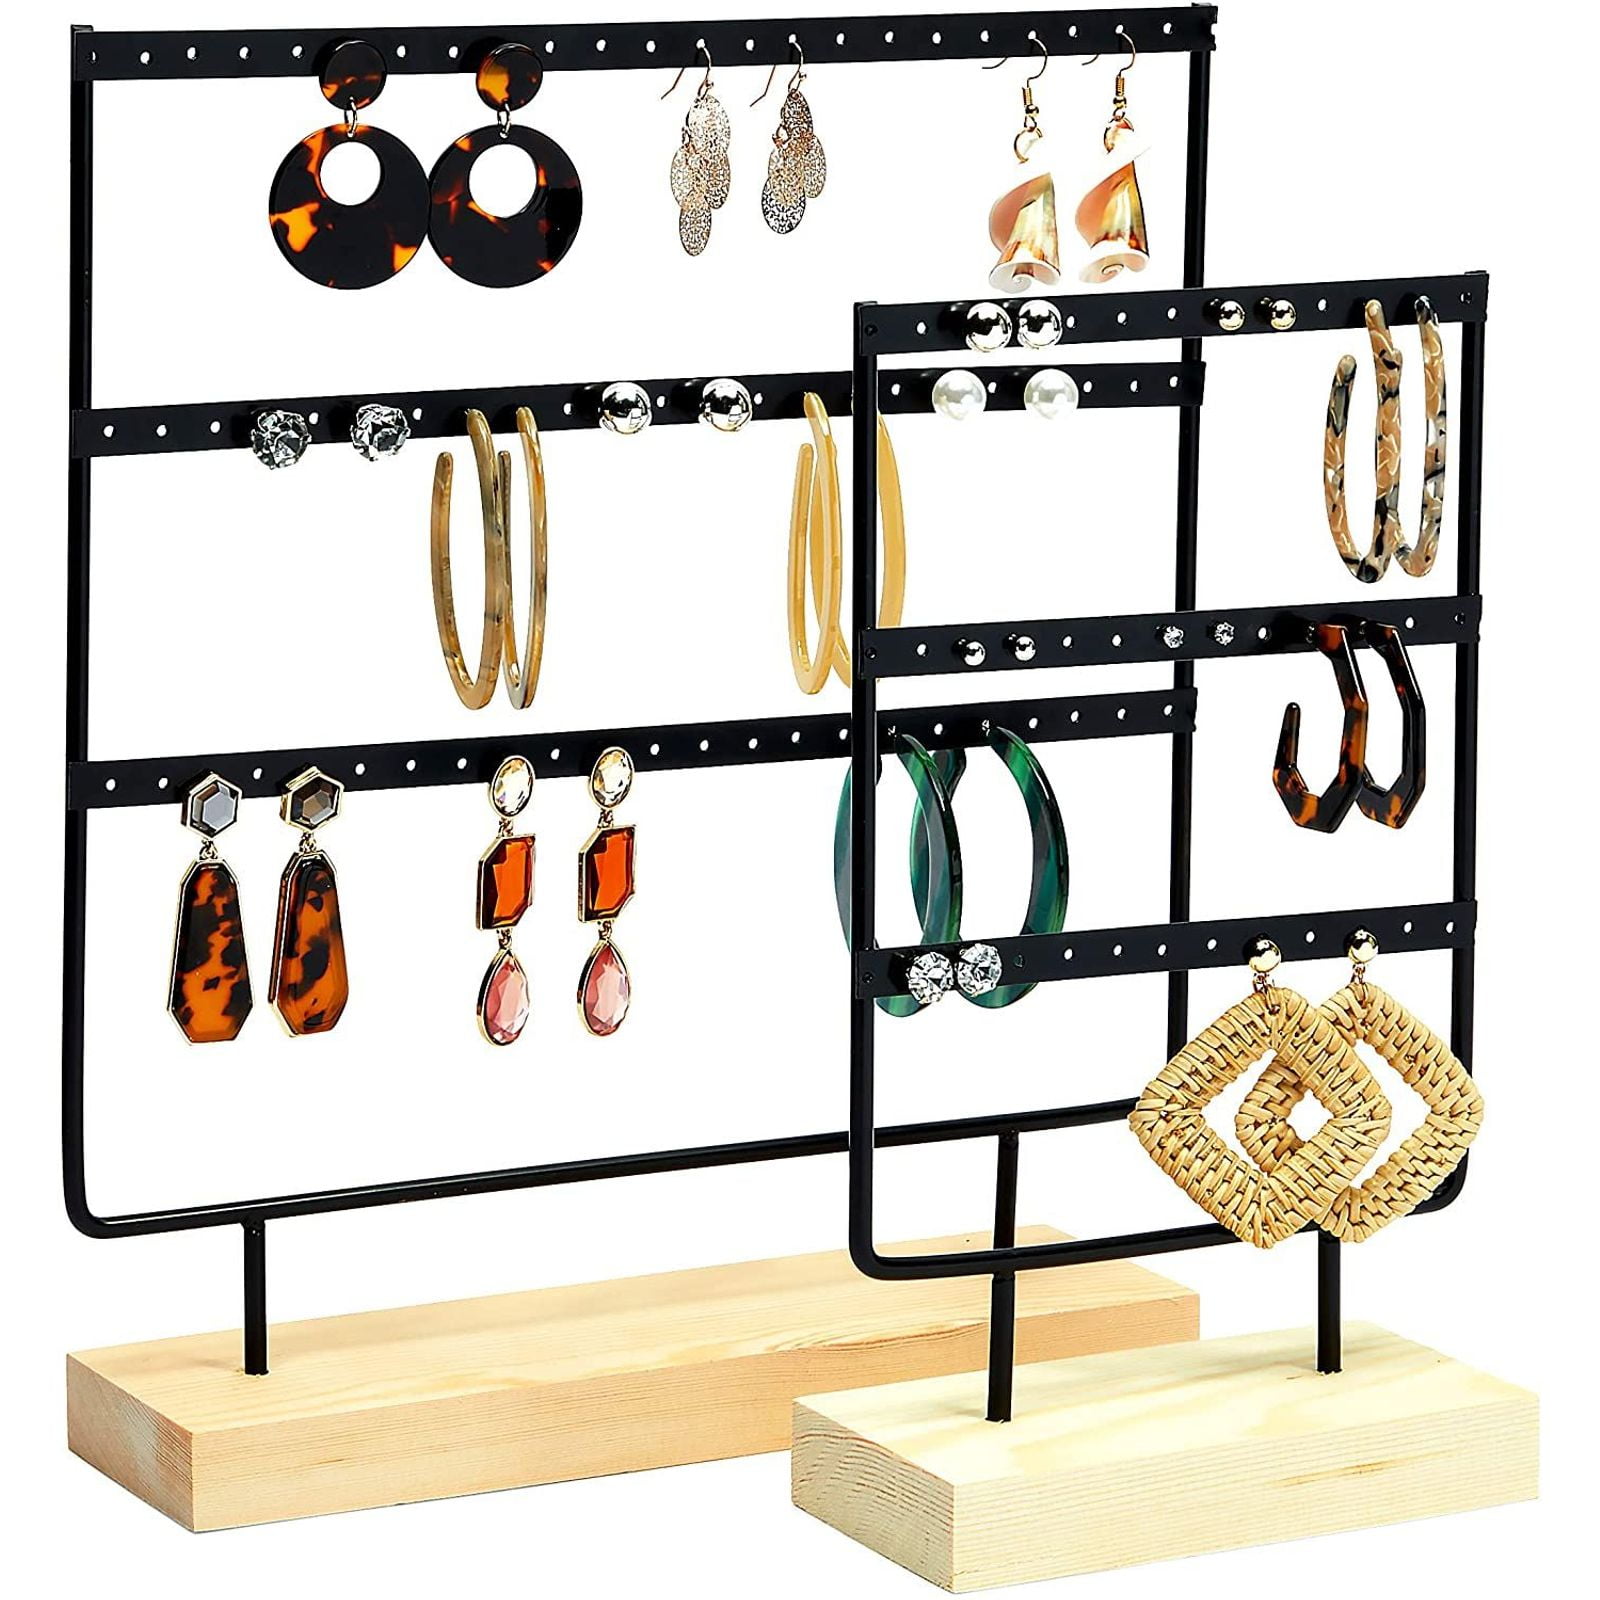 48-288 Holes Iron Jewelry Necklace Display Holder Earrings Rack Bracelet Holder 